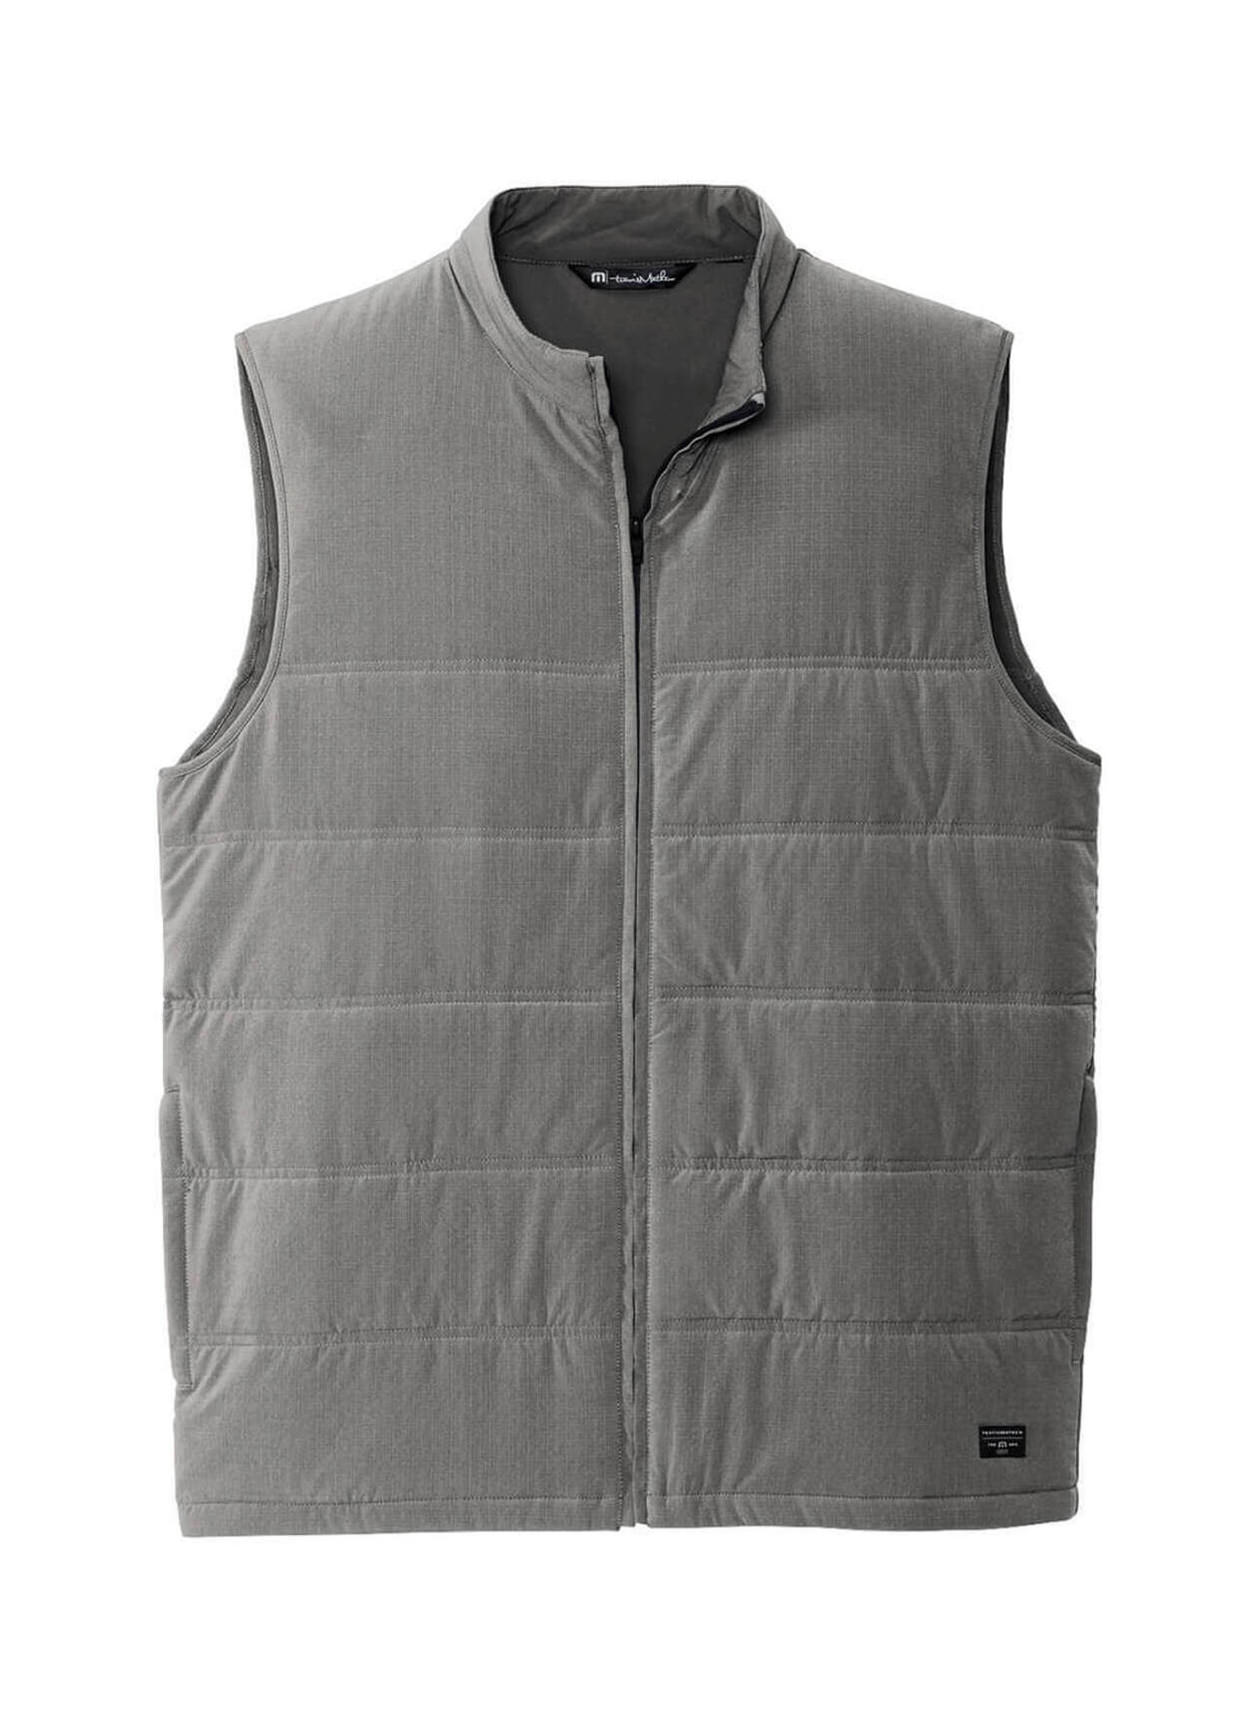 TravisMathew Men's Quiet Shade Grey Cold Bay Vest | Customized Vest